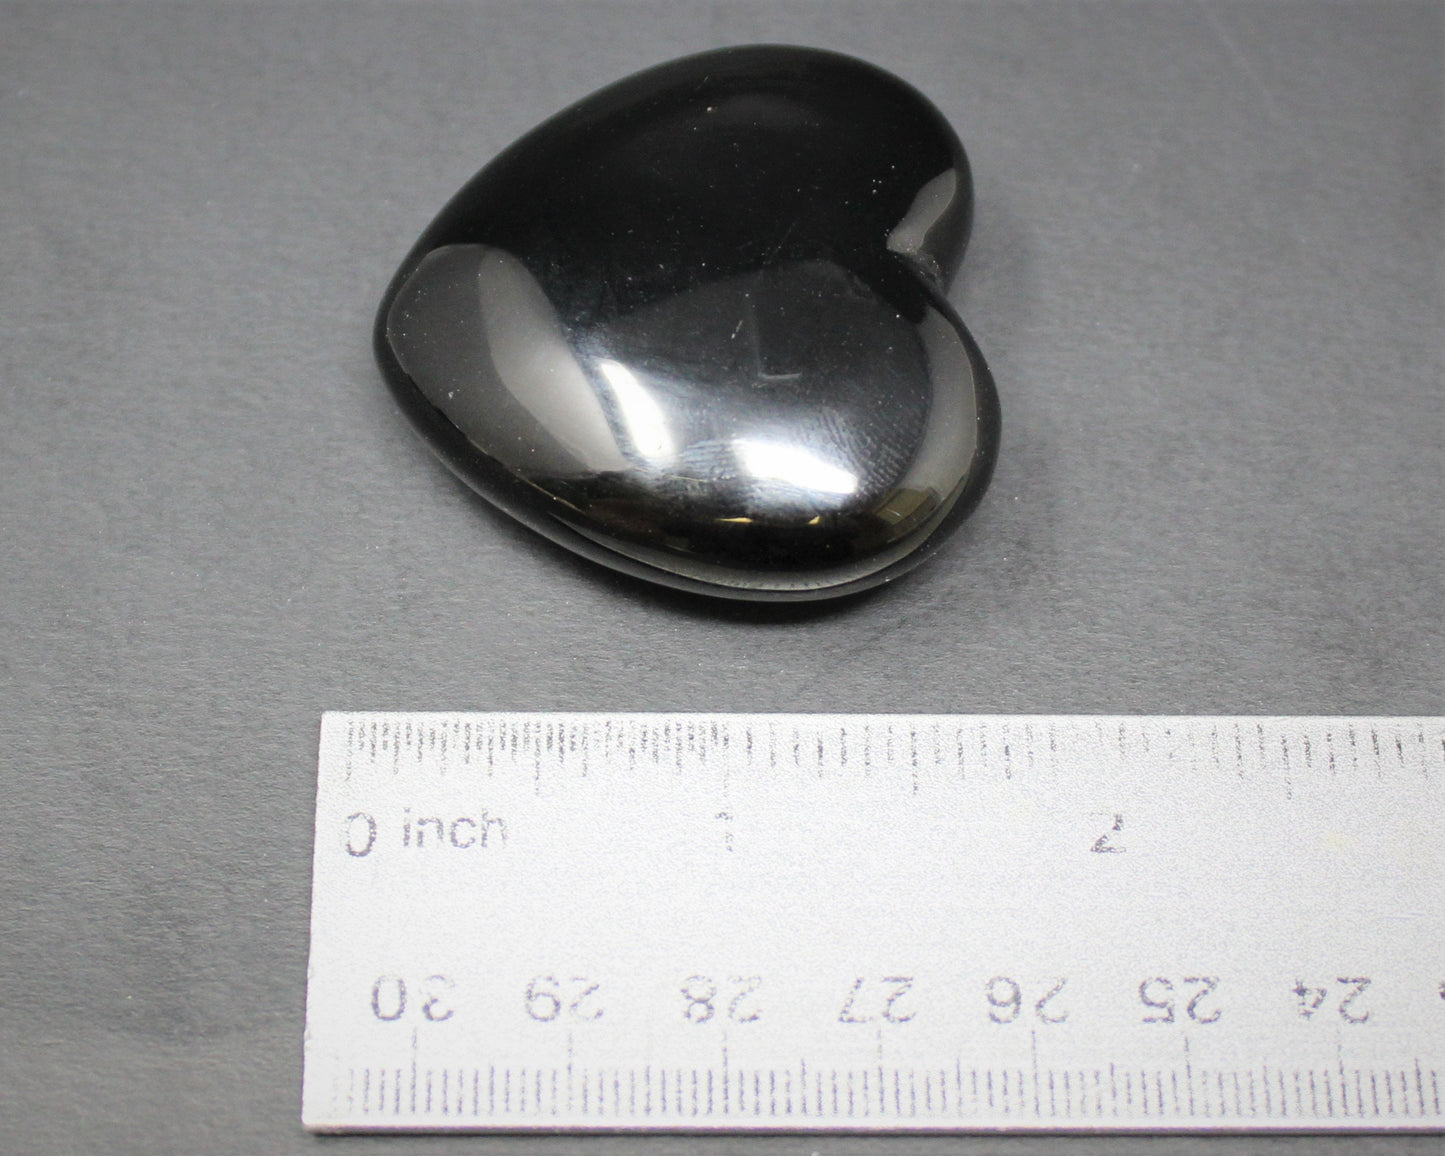 Large Obsidian Gemstone